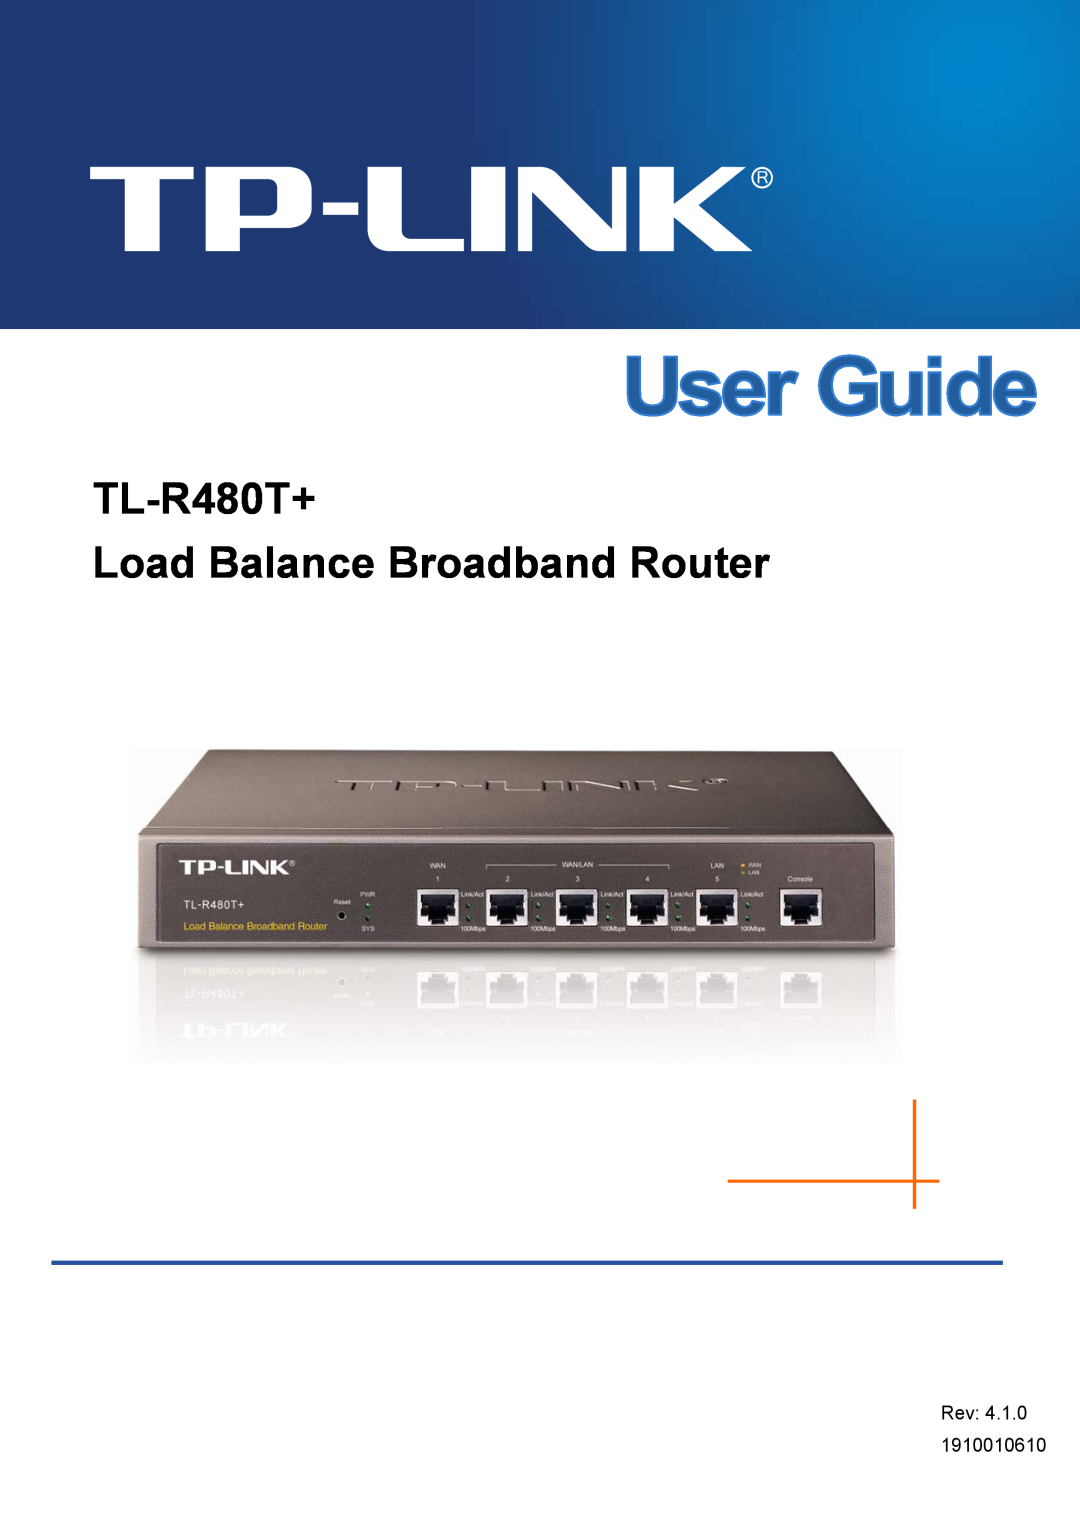 TP-Link manual TL-R480T+ Load Balance Broadband Router, REV6.2.0 1910011011 